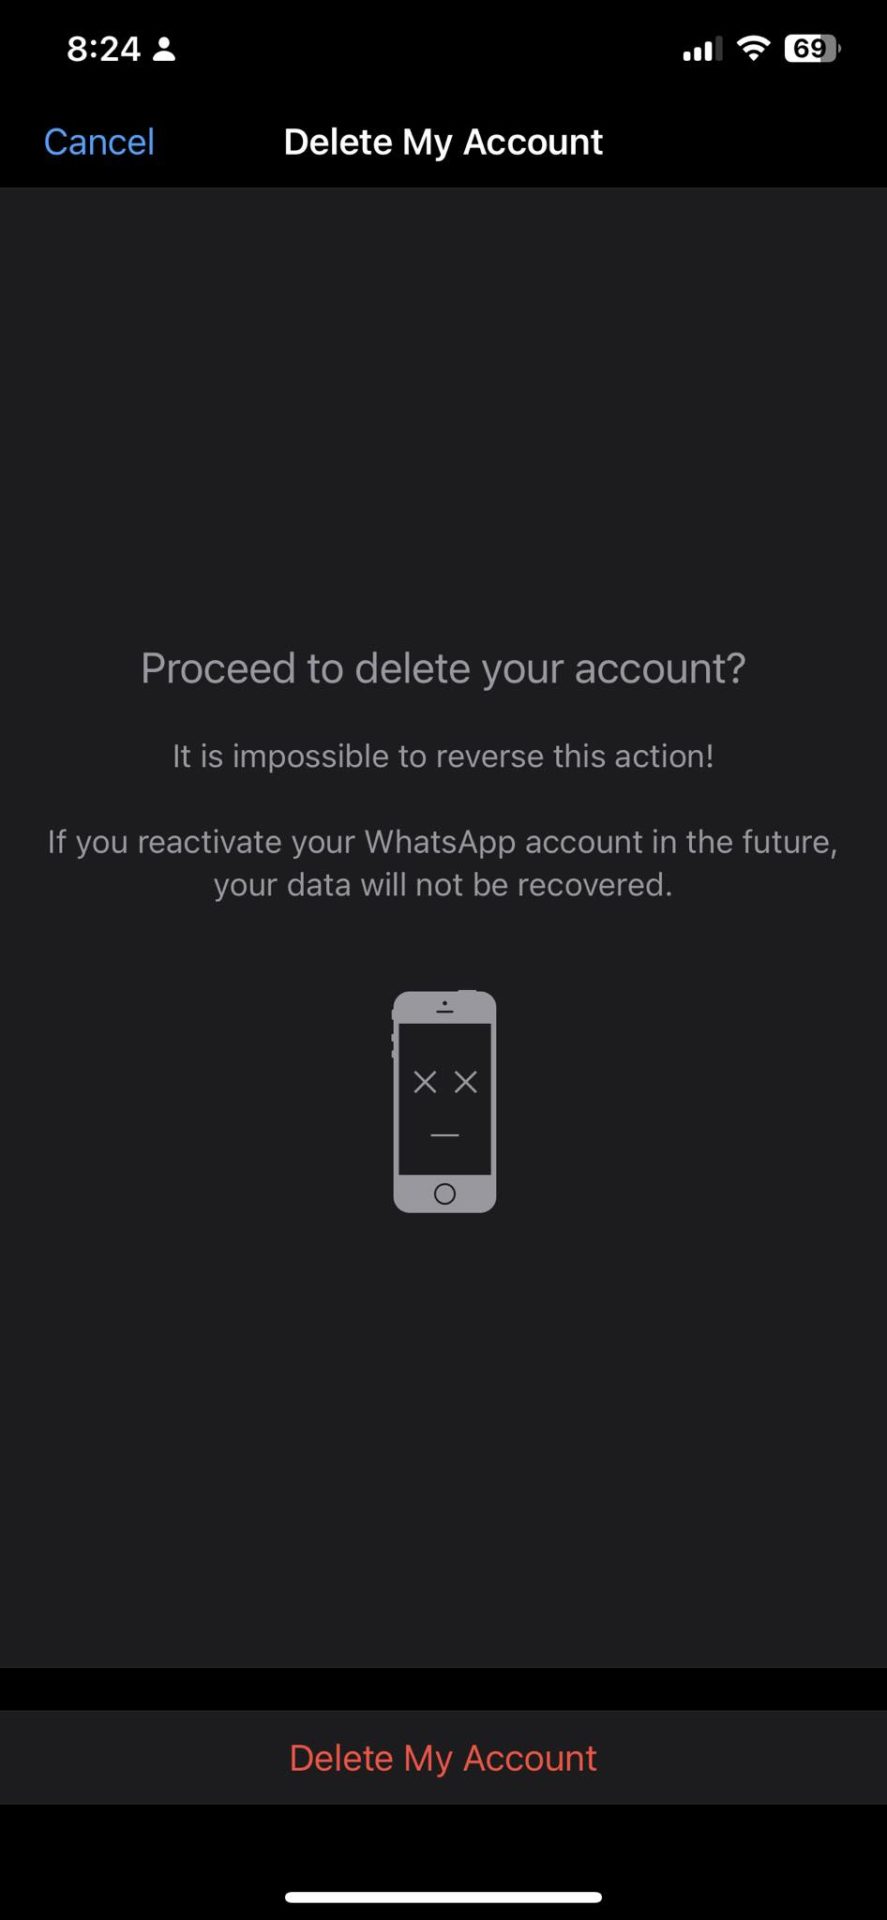 Delete My Account option in WhatsApp